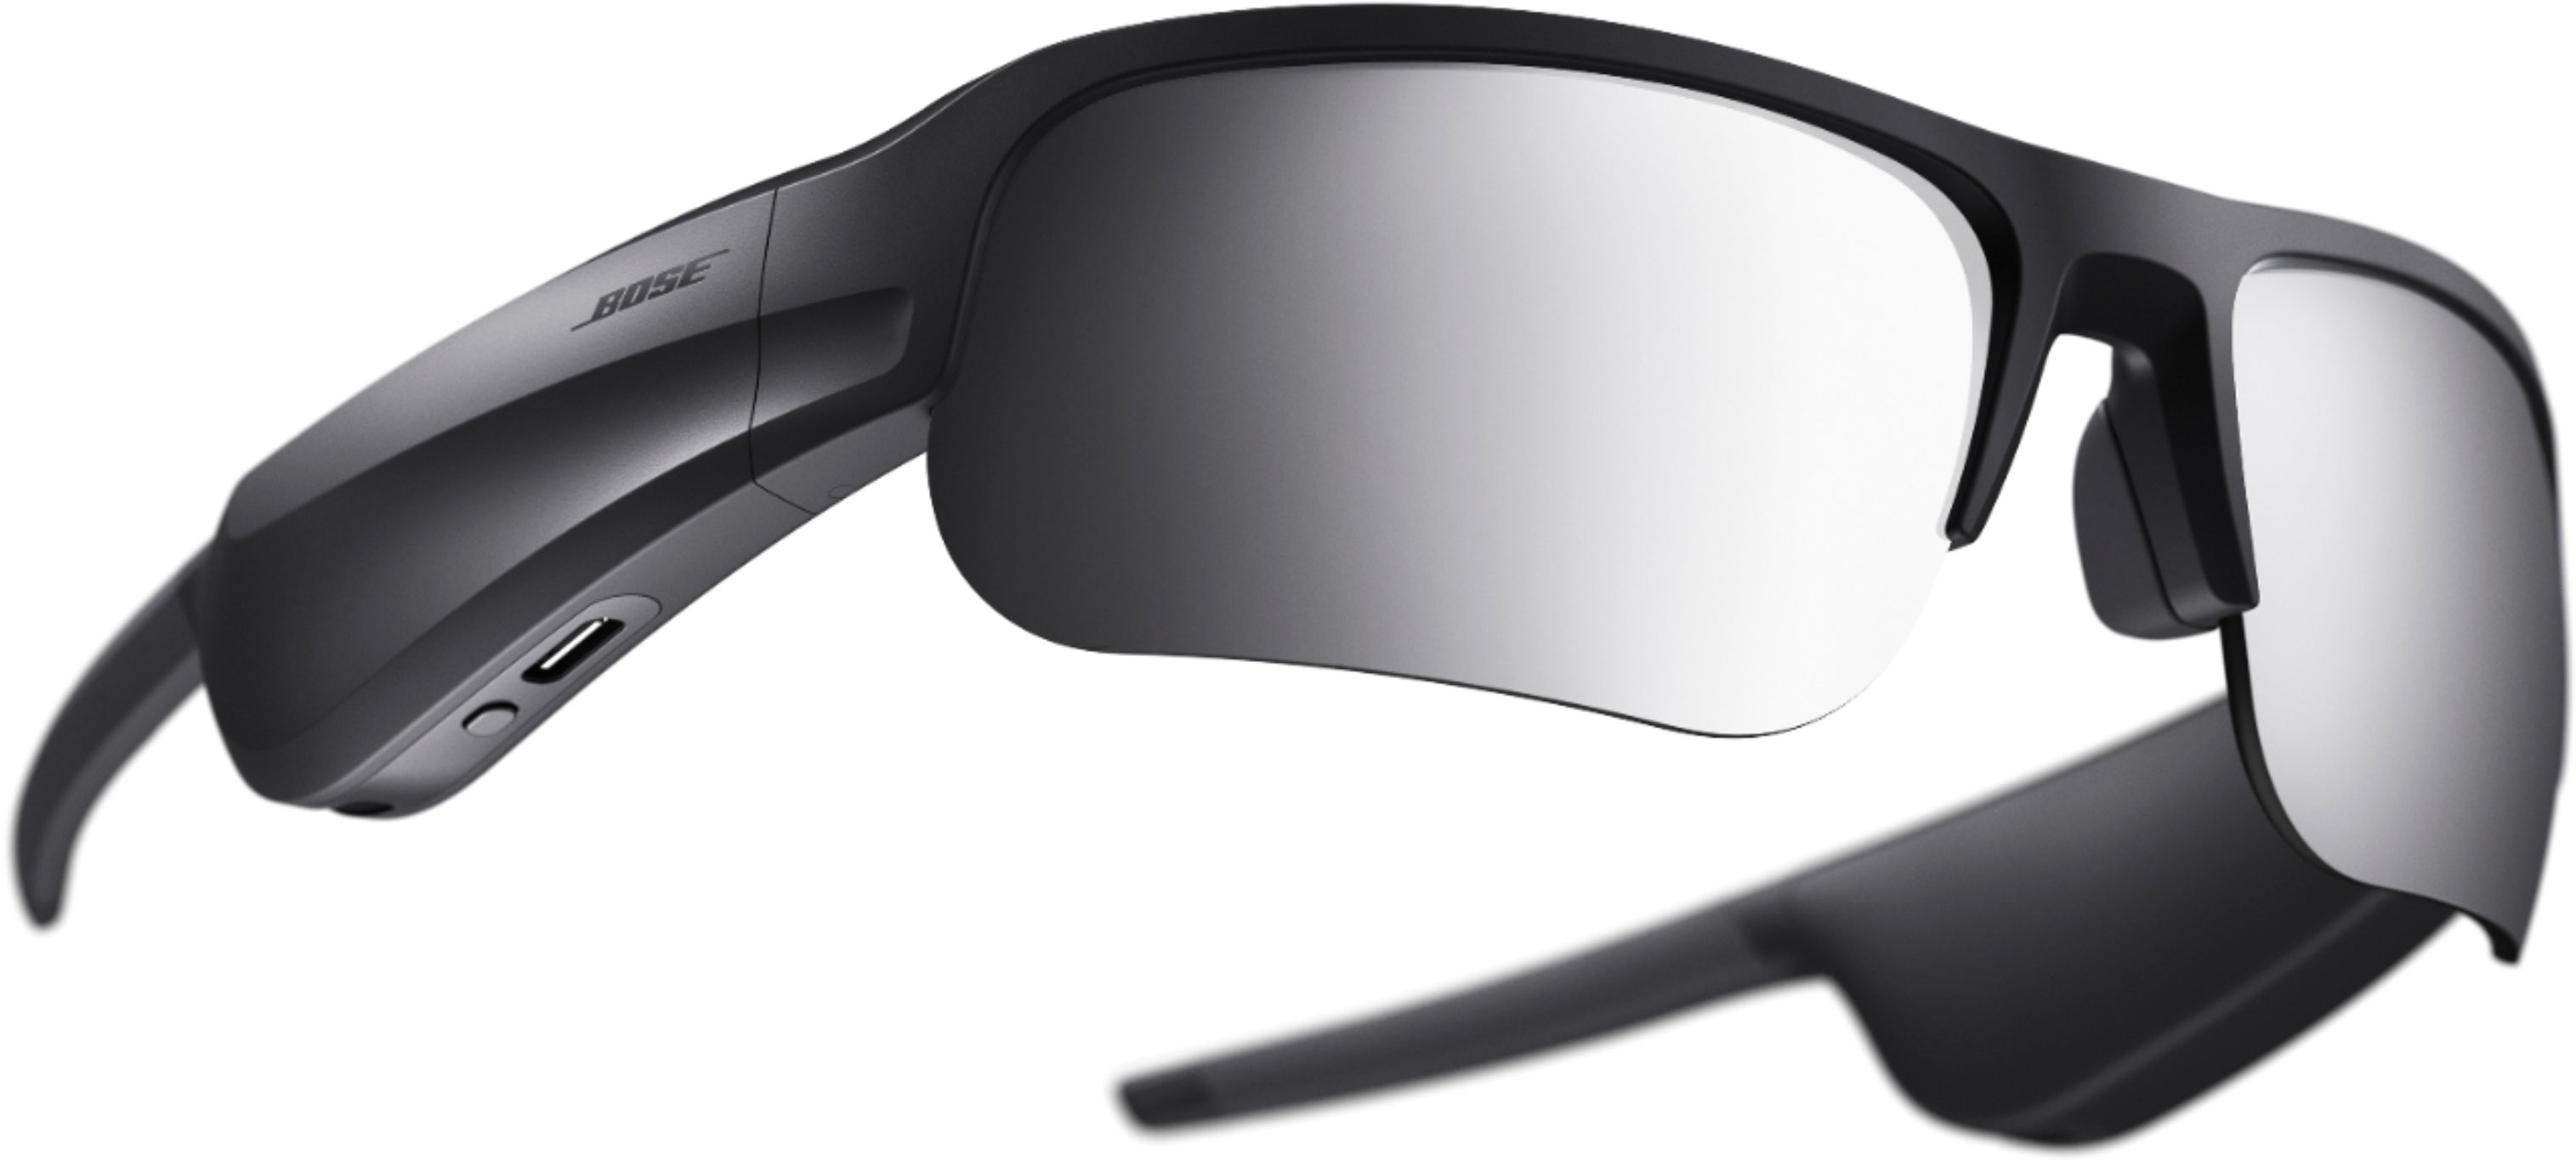 Tempo – Audio Sunglasses with Polarized Lenses Black 839767-0110 Best Buy